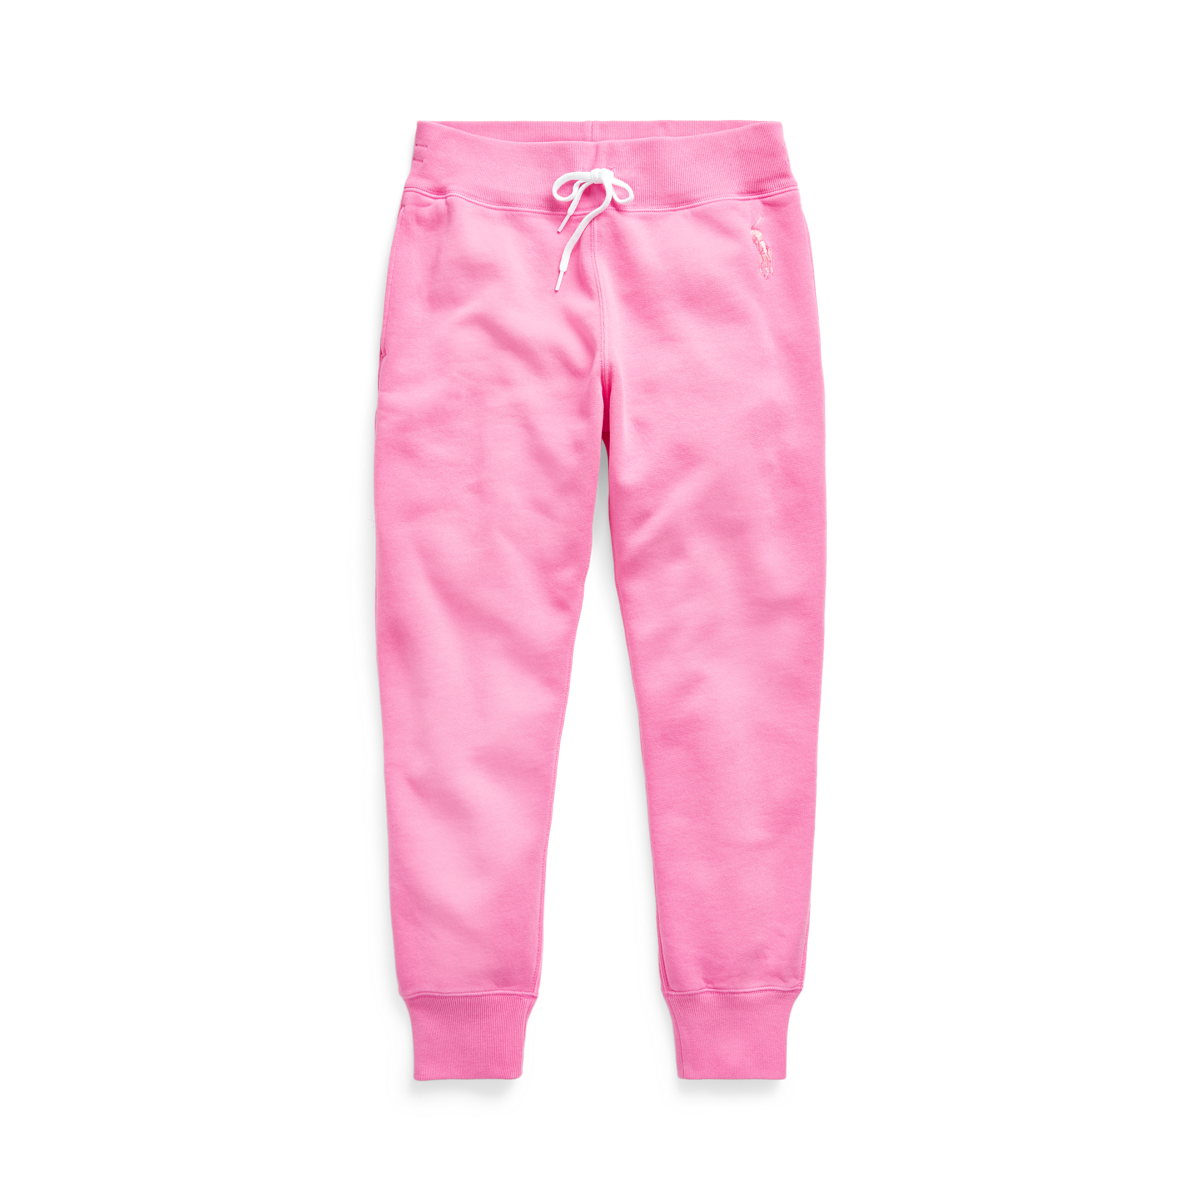 Polo Ralph Lauren - 8003 K Sports Trousers Pink